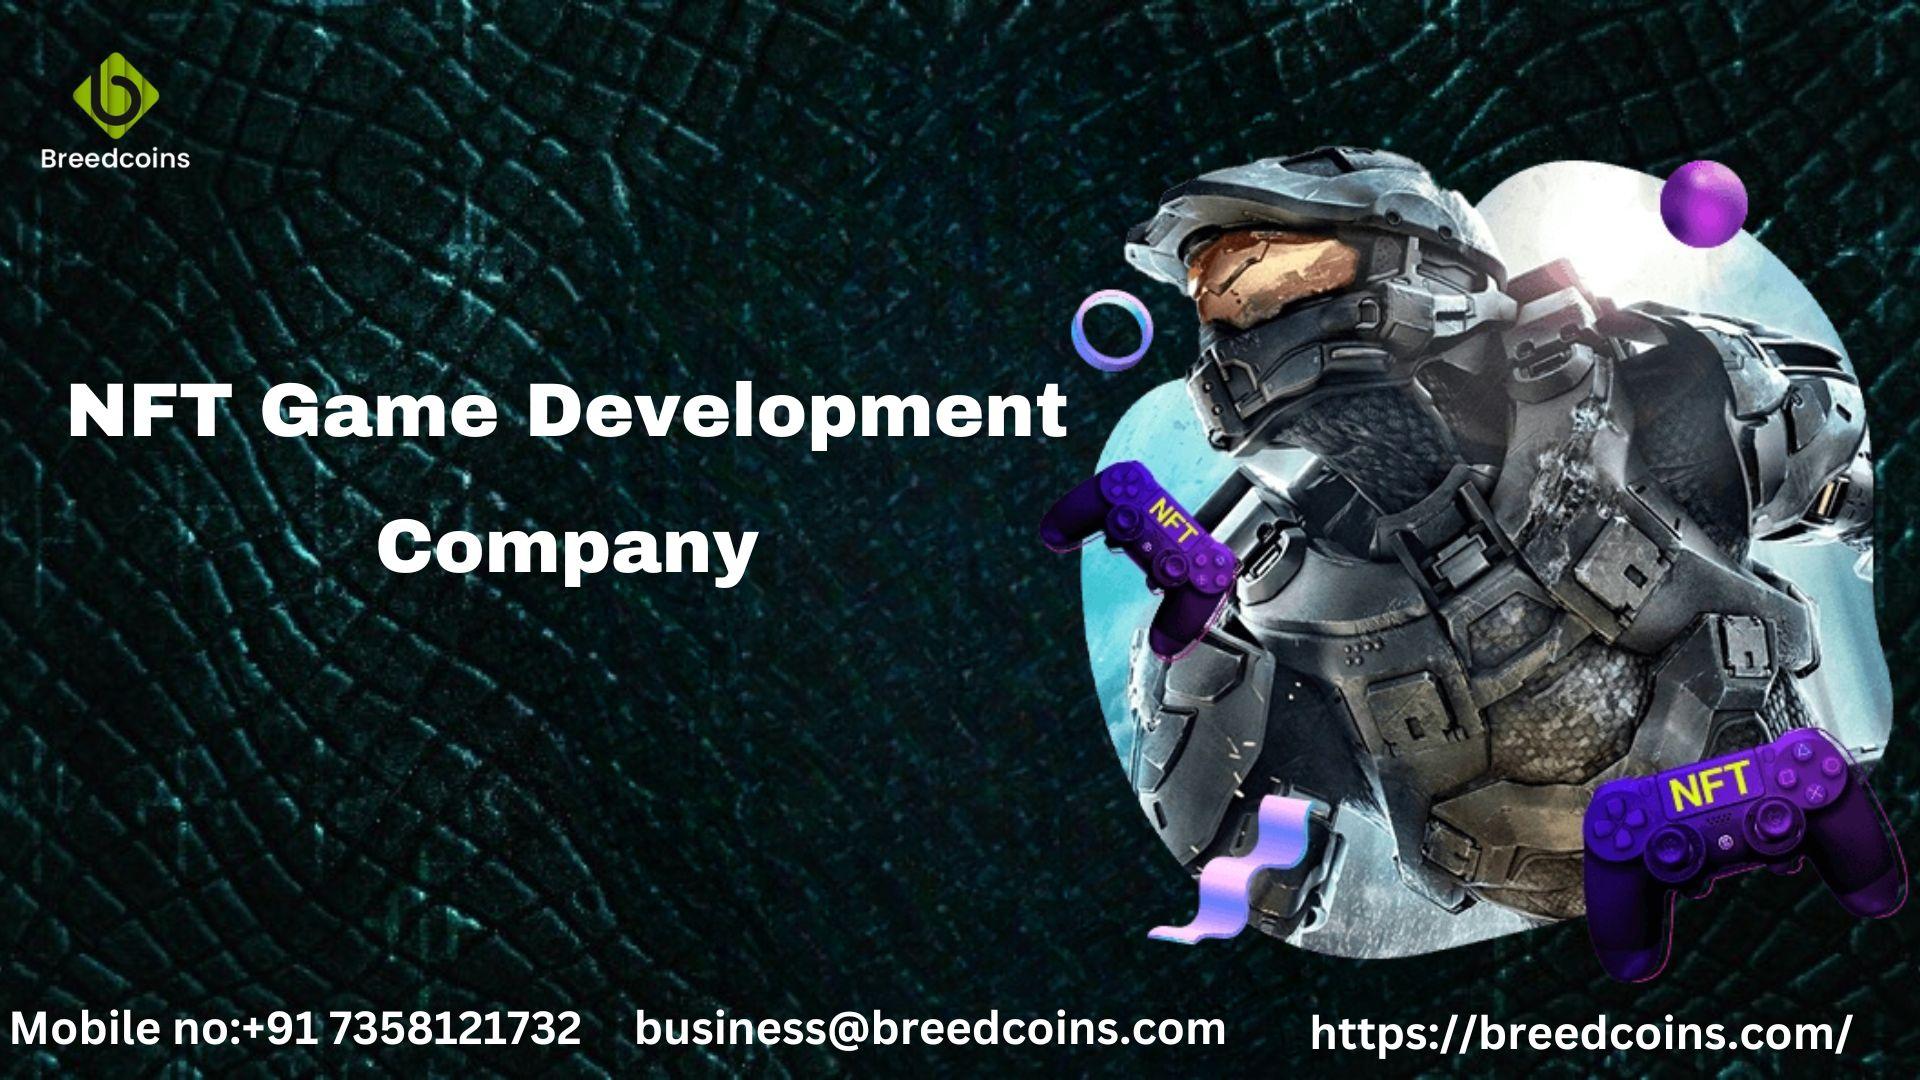 NFT Game Development Company - Breedcoins